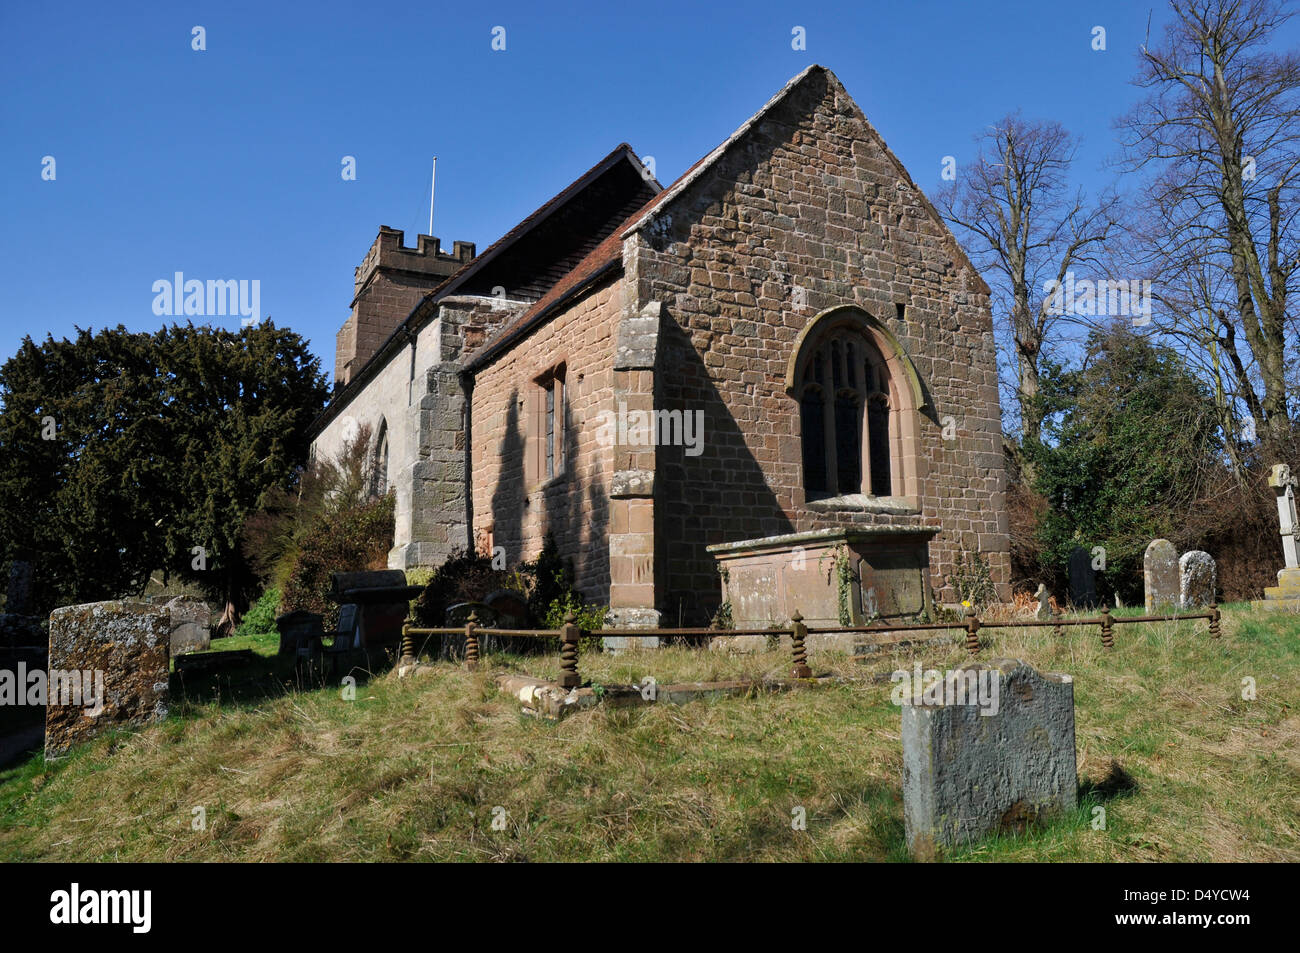 The local parish church in Ashow, Warwickshire. Stock Photo